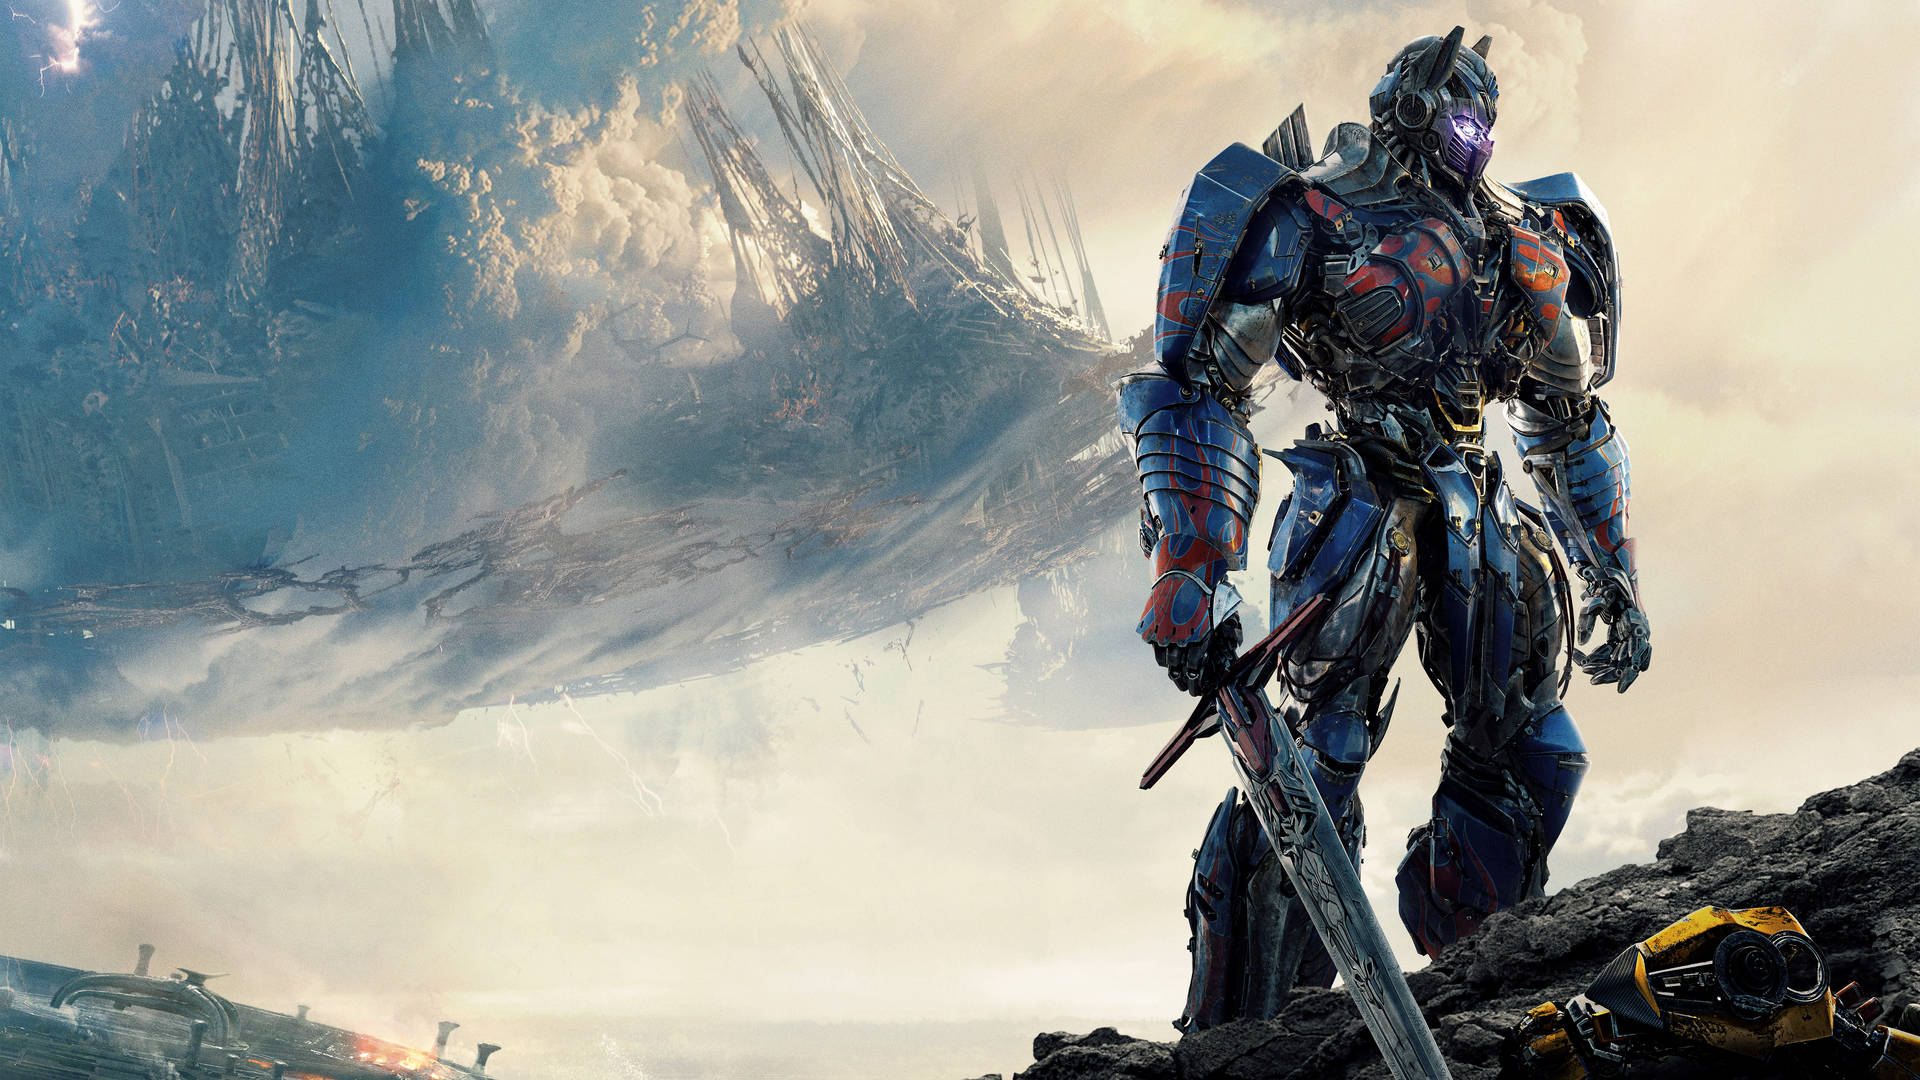 Epic Battle - Transformers Prime Optimus Prime And Megatron Wallpaper